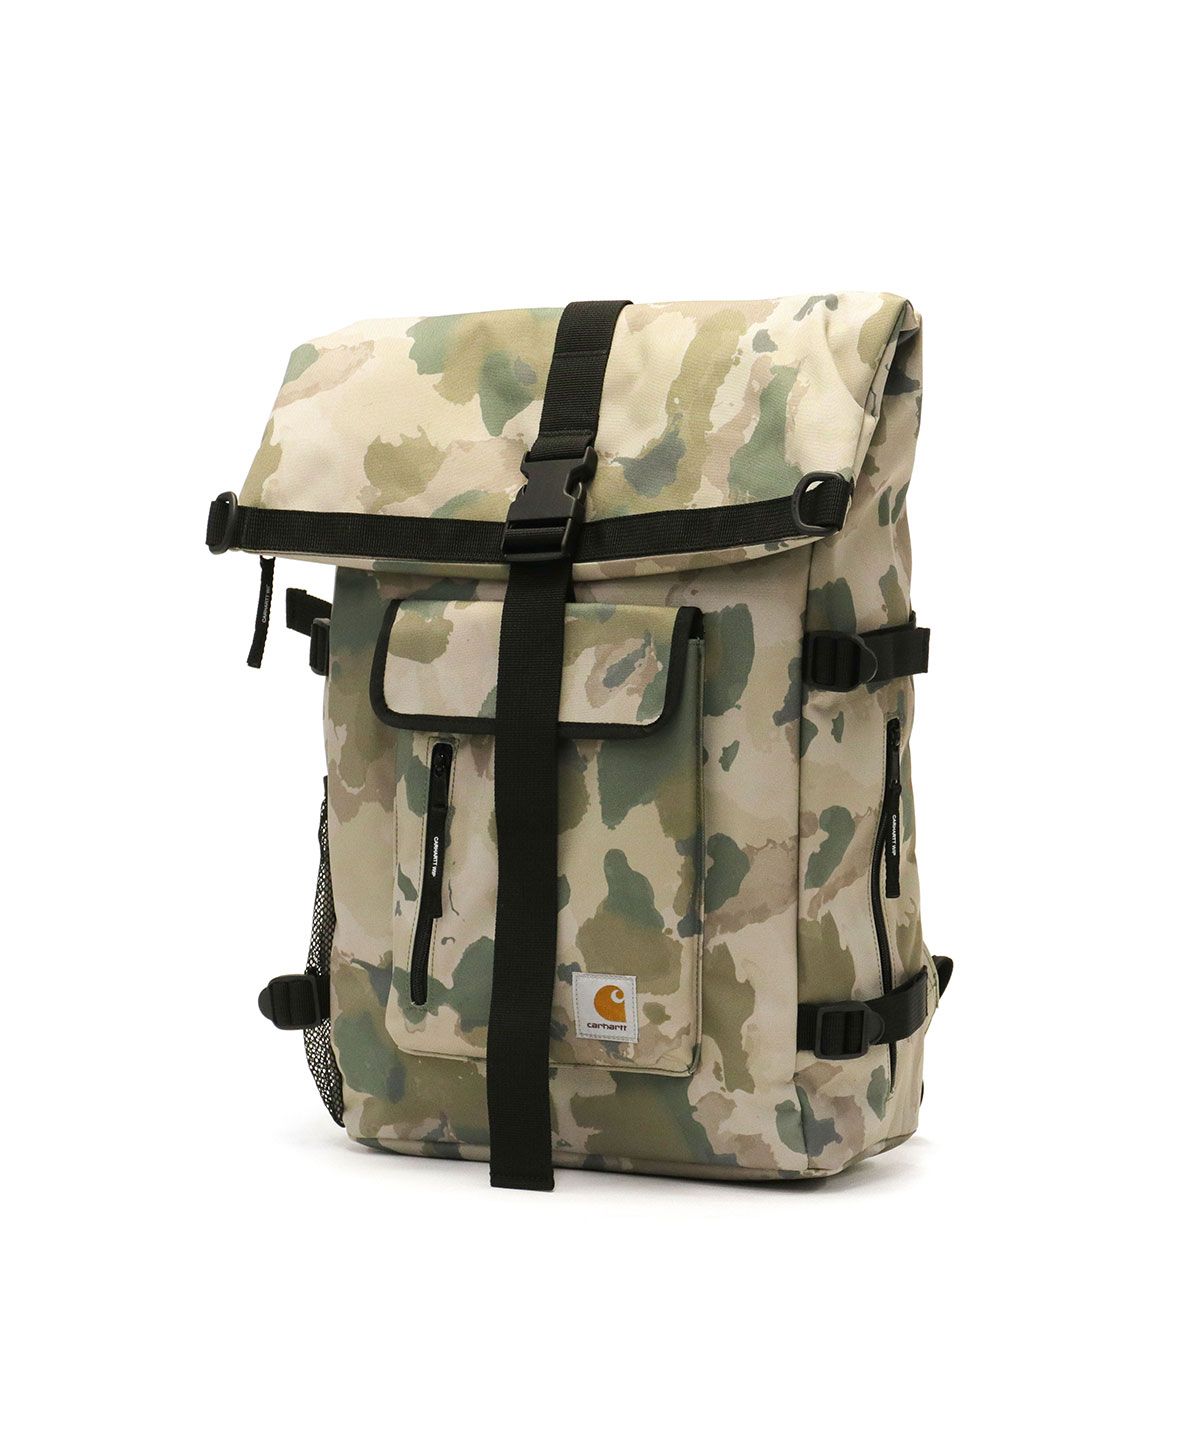 CARHARTT WIP camo backpack